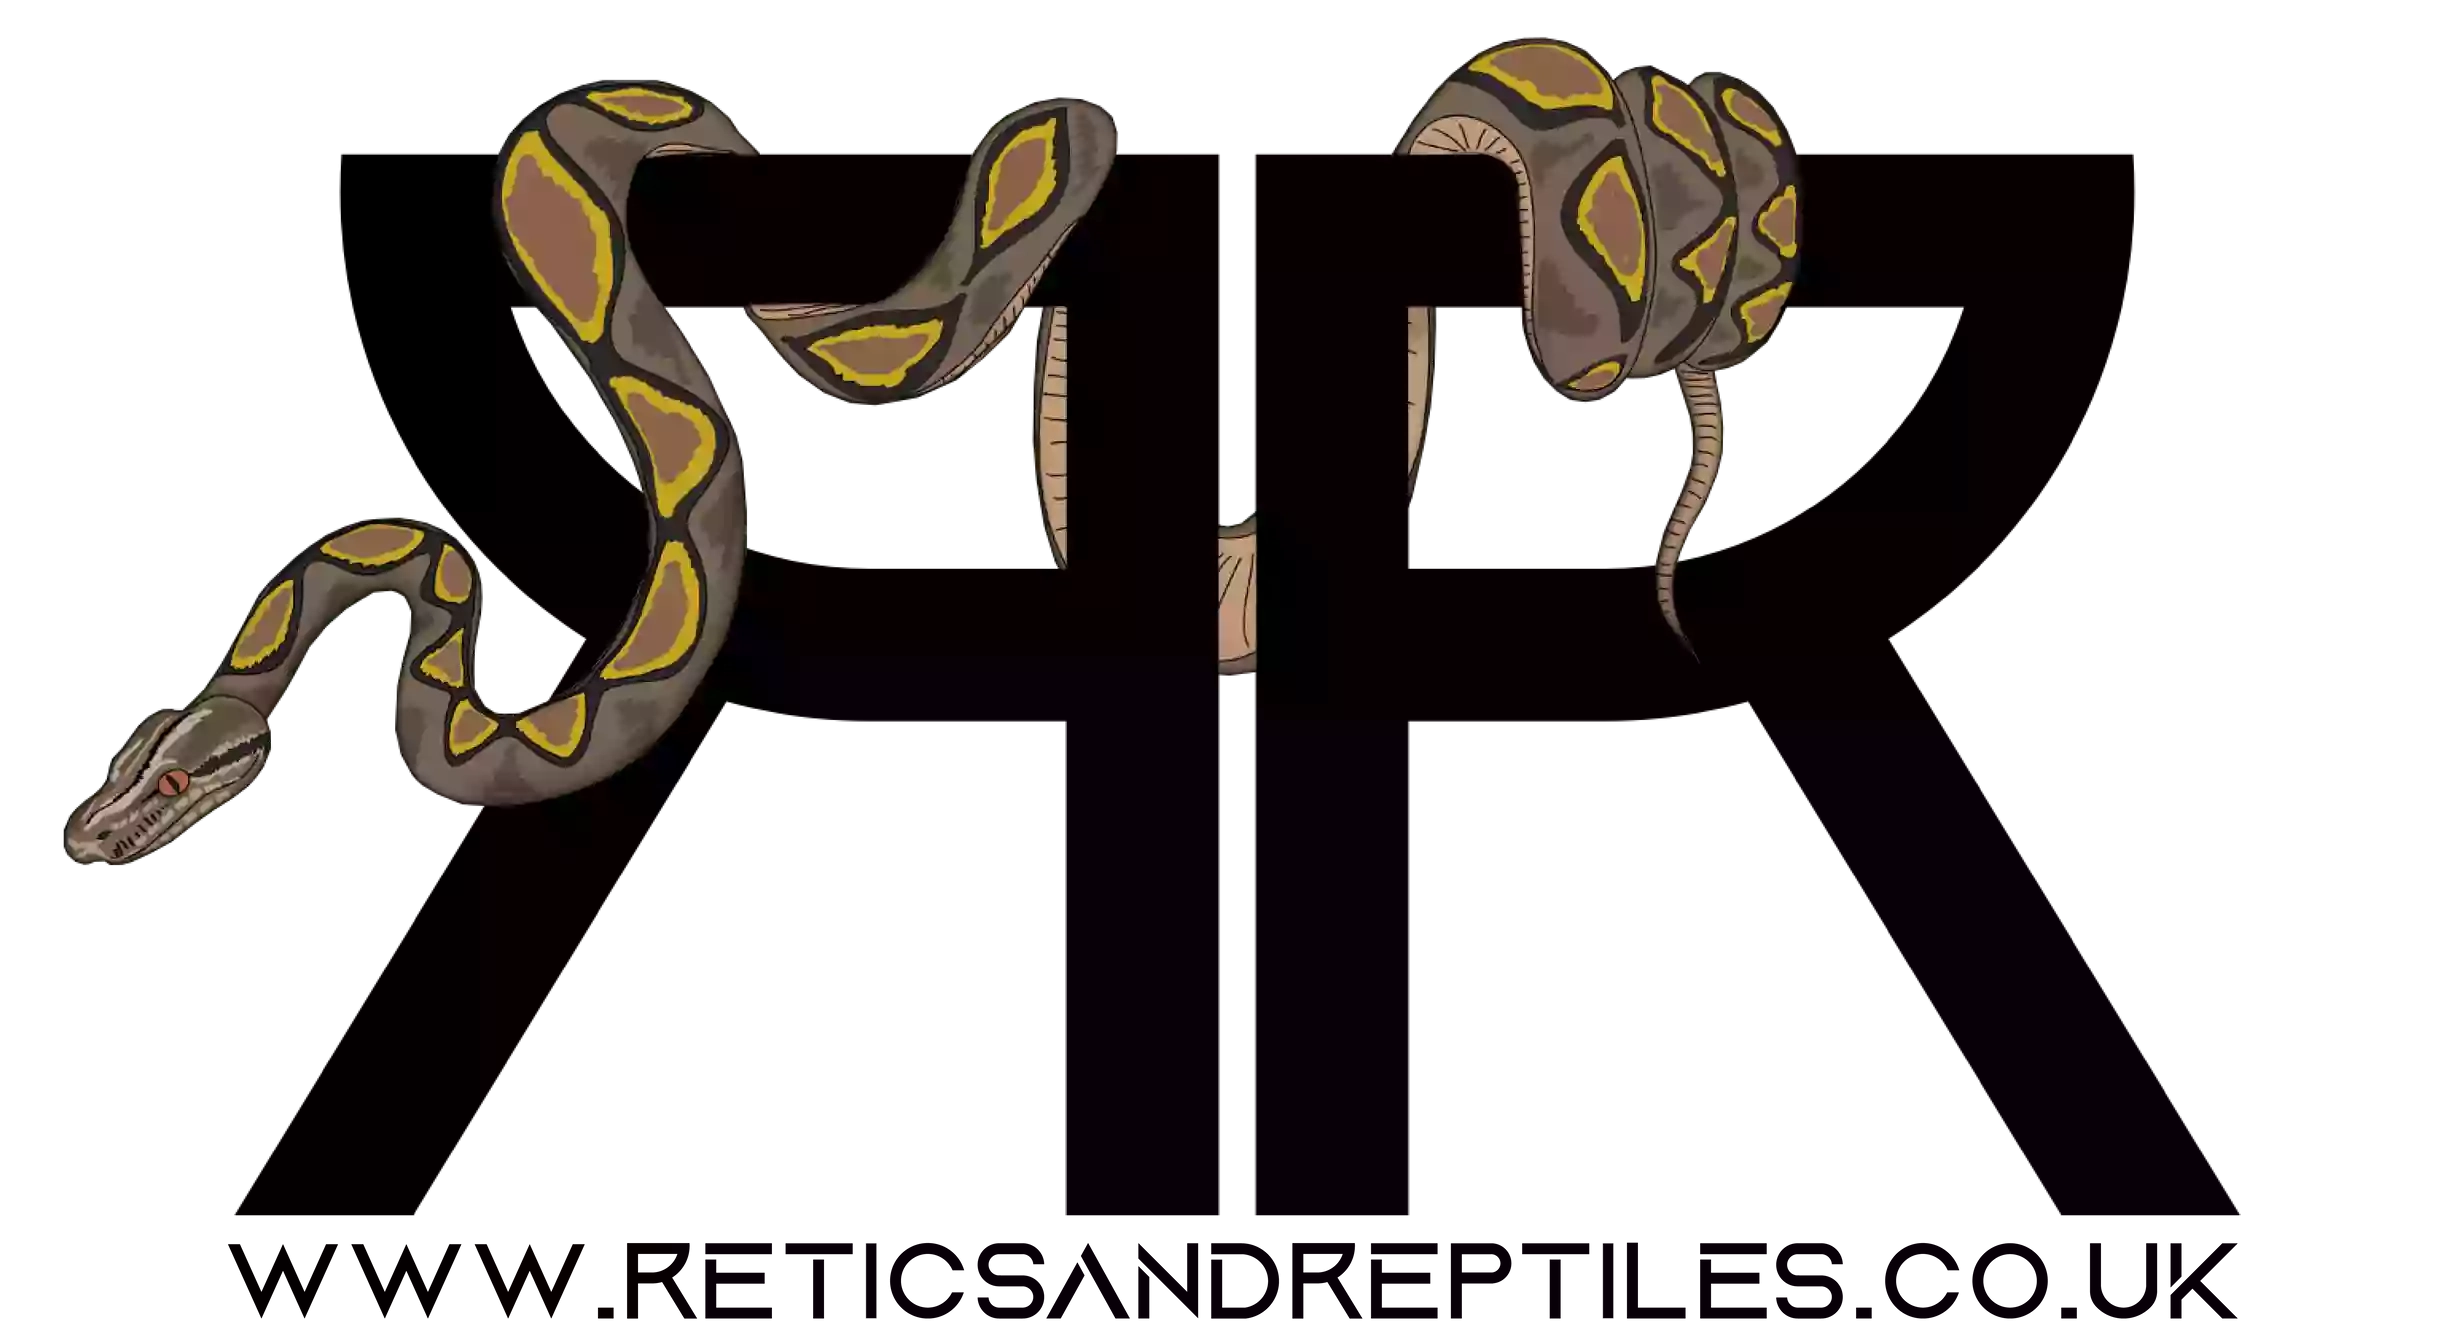 Retics and Reptiles